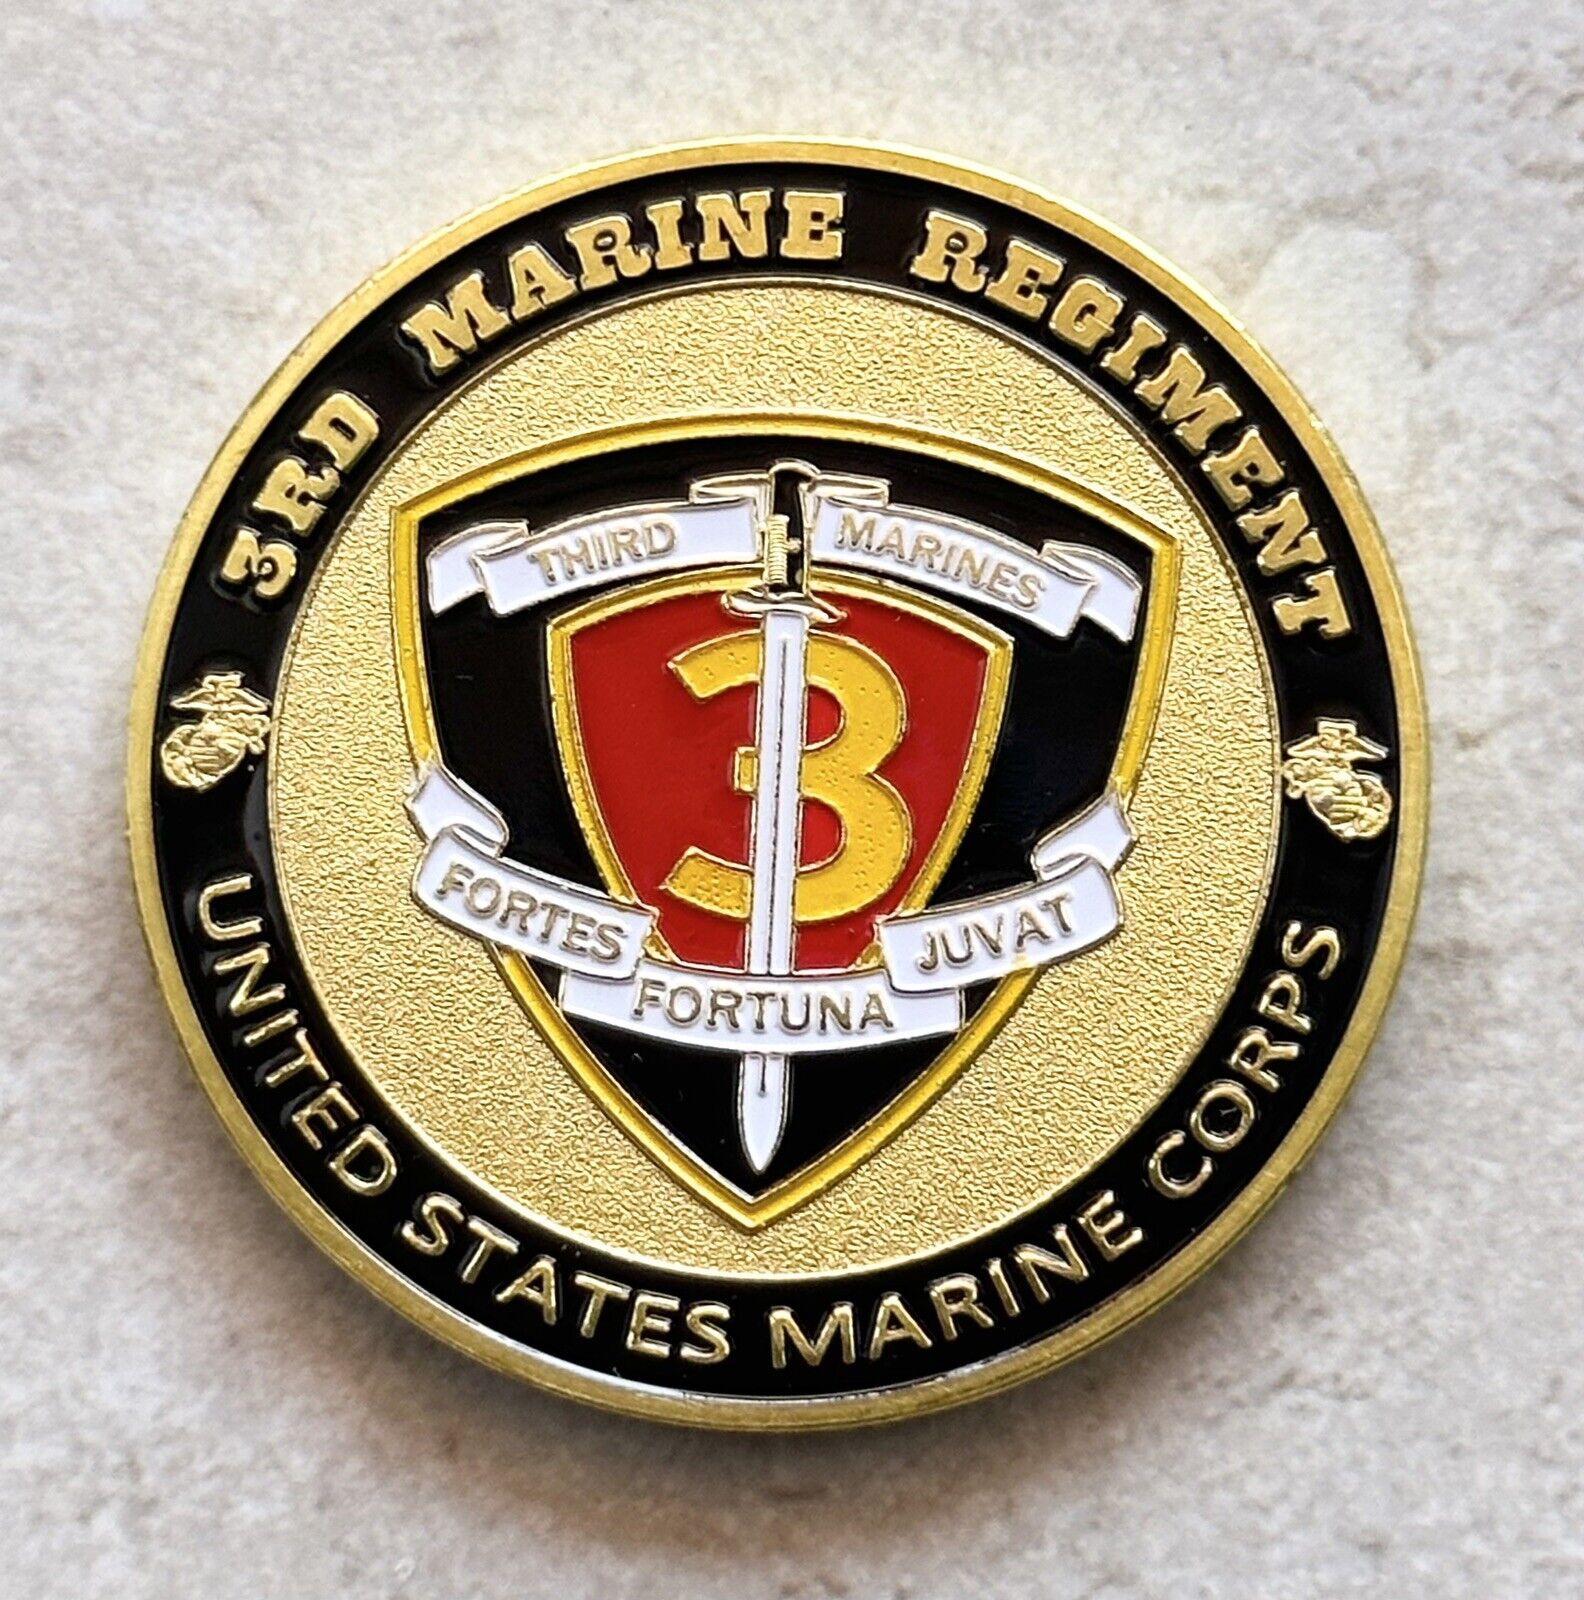 USMC US MARINE CORPS - 3rd MARINE REGIMENT Challenge Coin